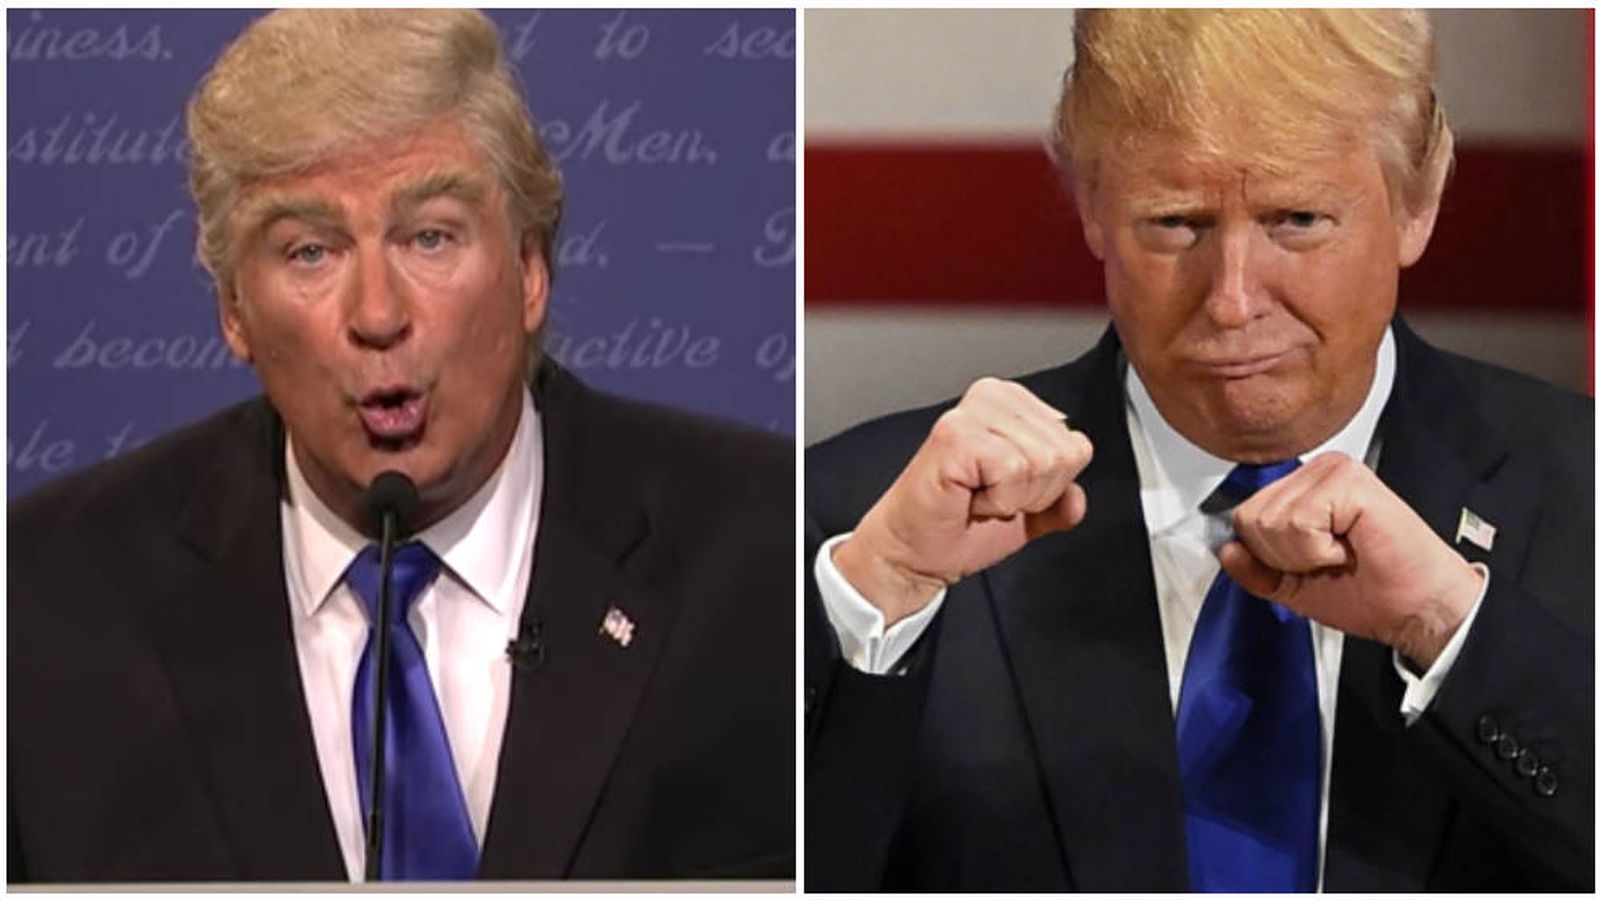 Foto: A la izquierda, Alec Baldwing caracterizado como Donald Trump. A la derecha, Donald Trump